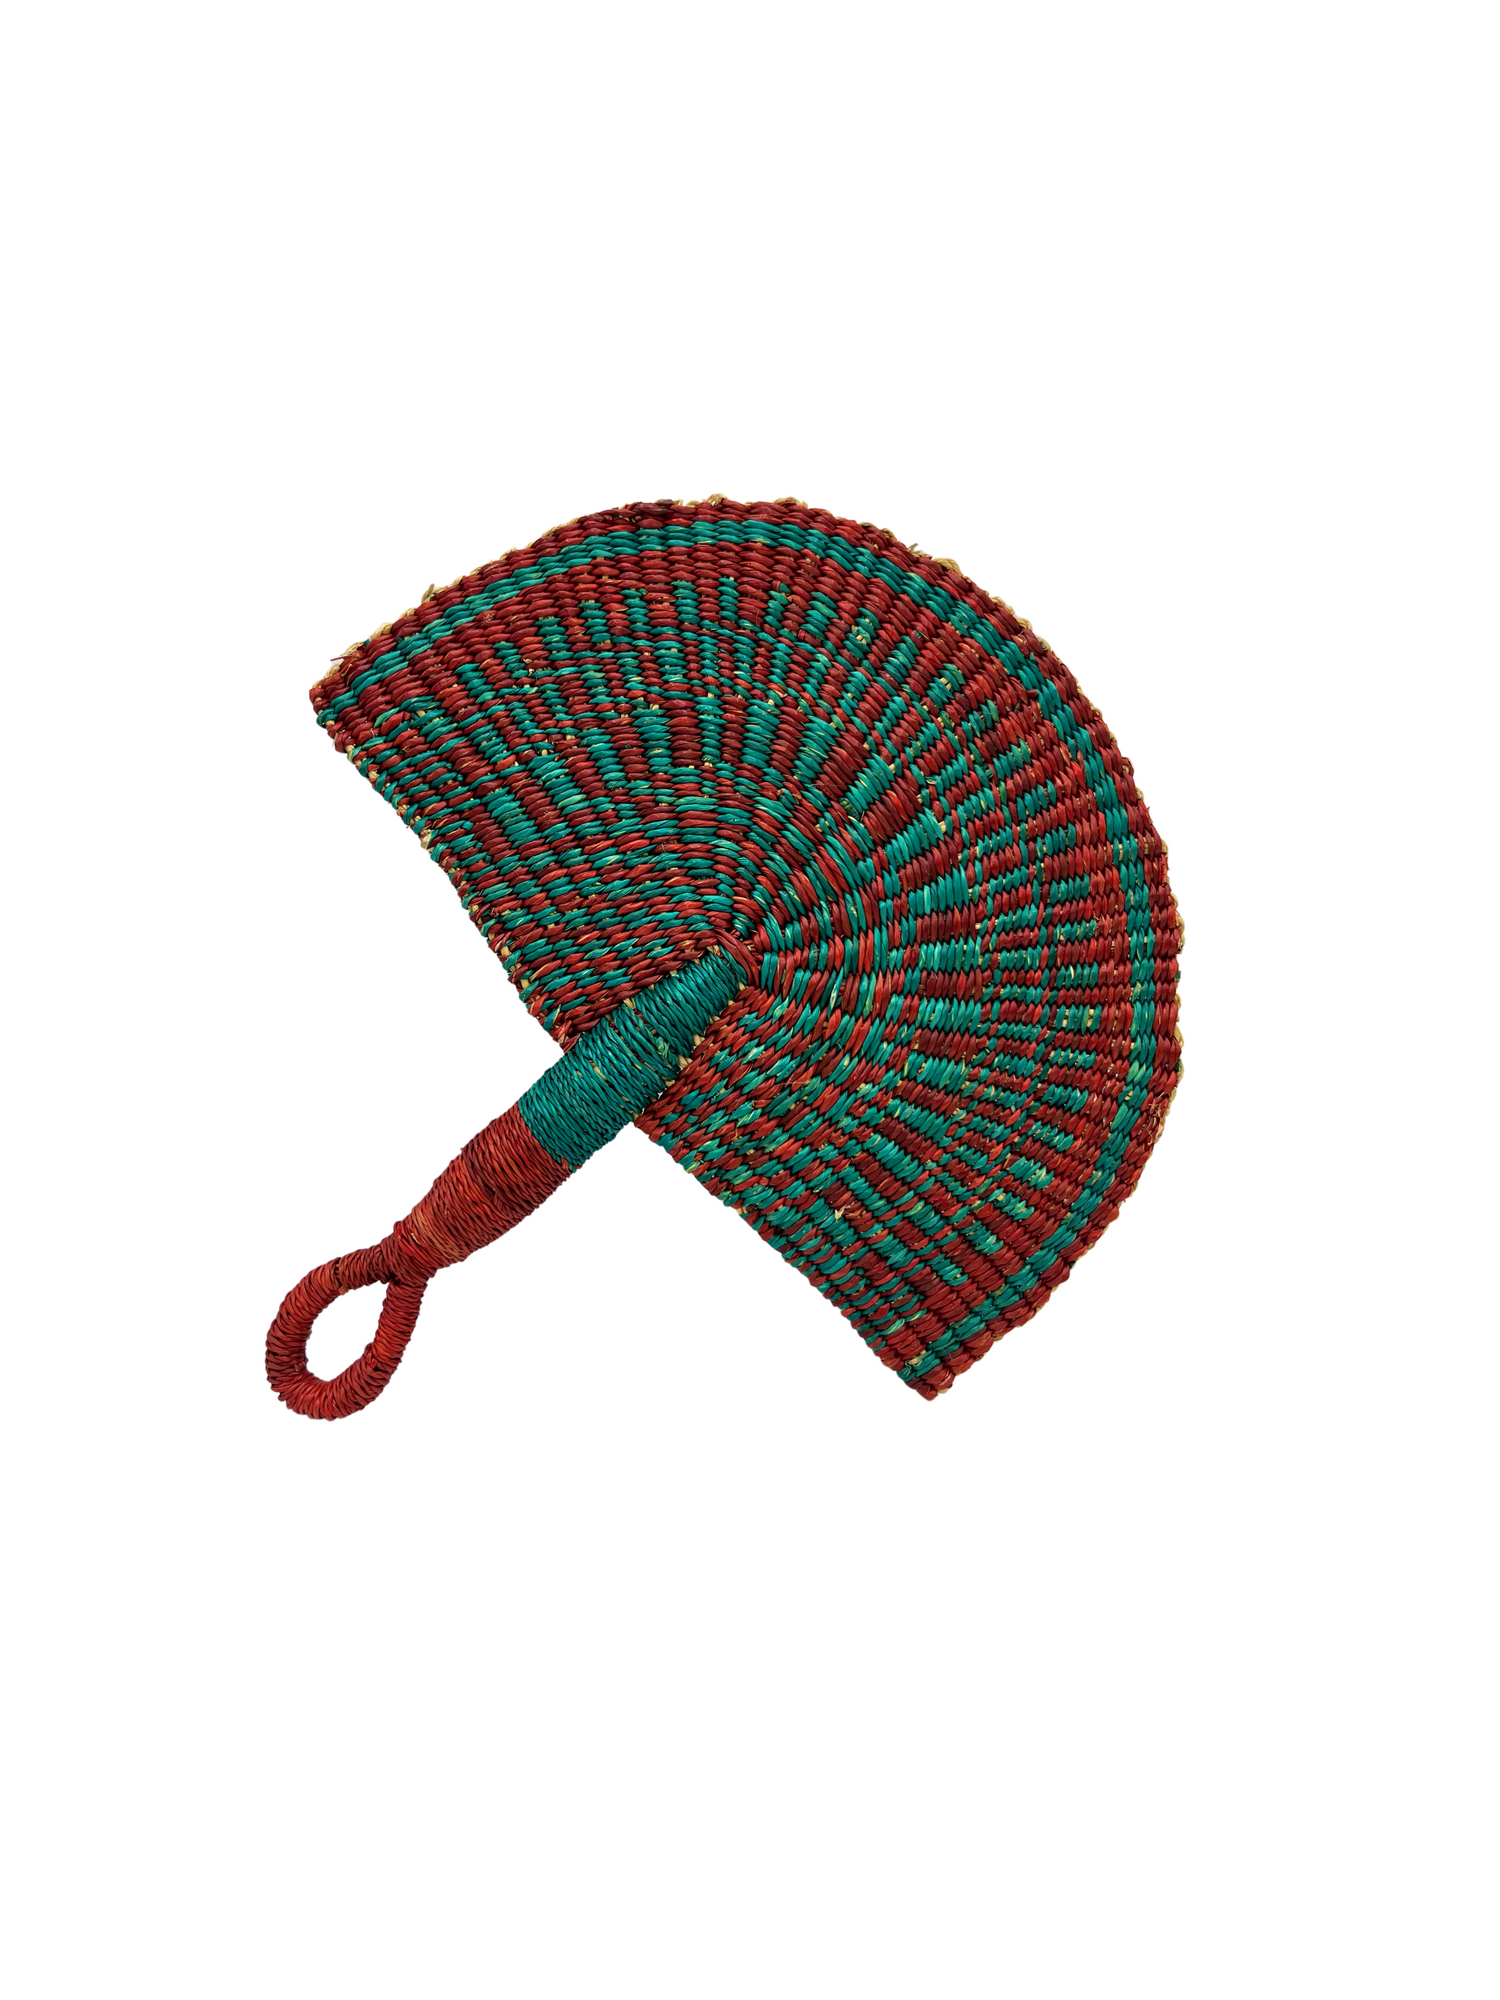 Colorful Hand Fan